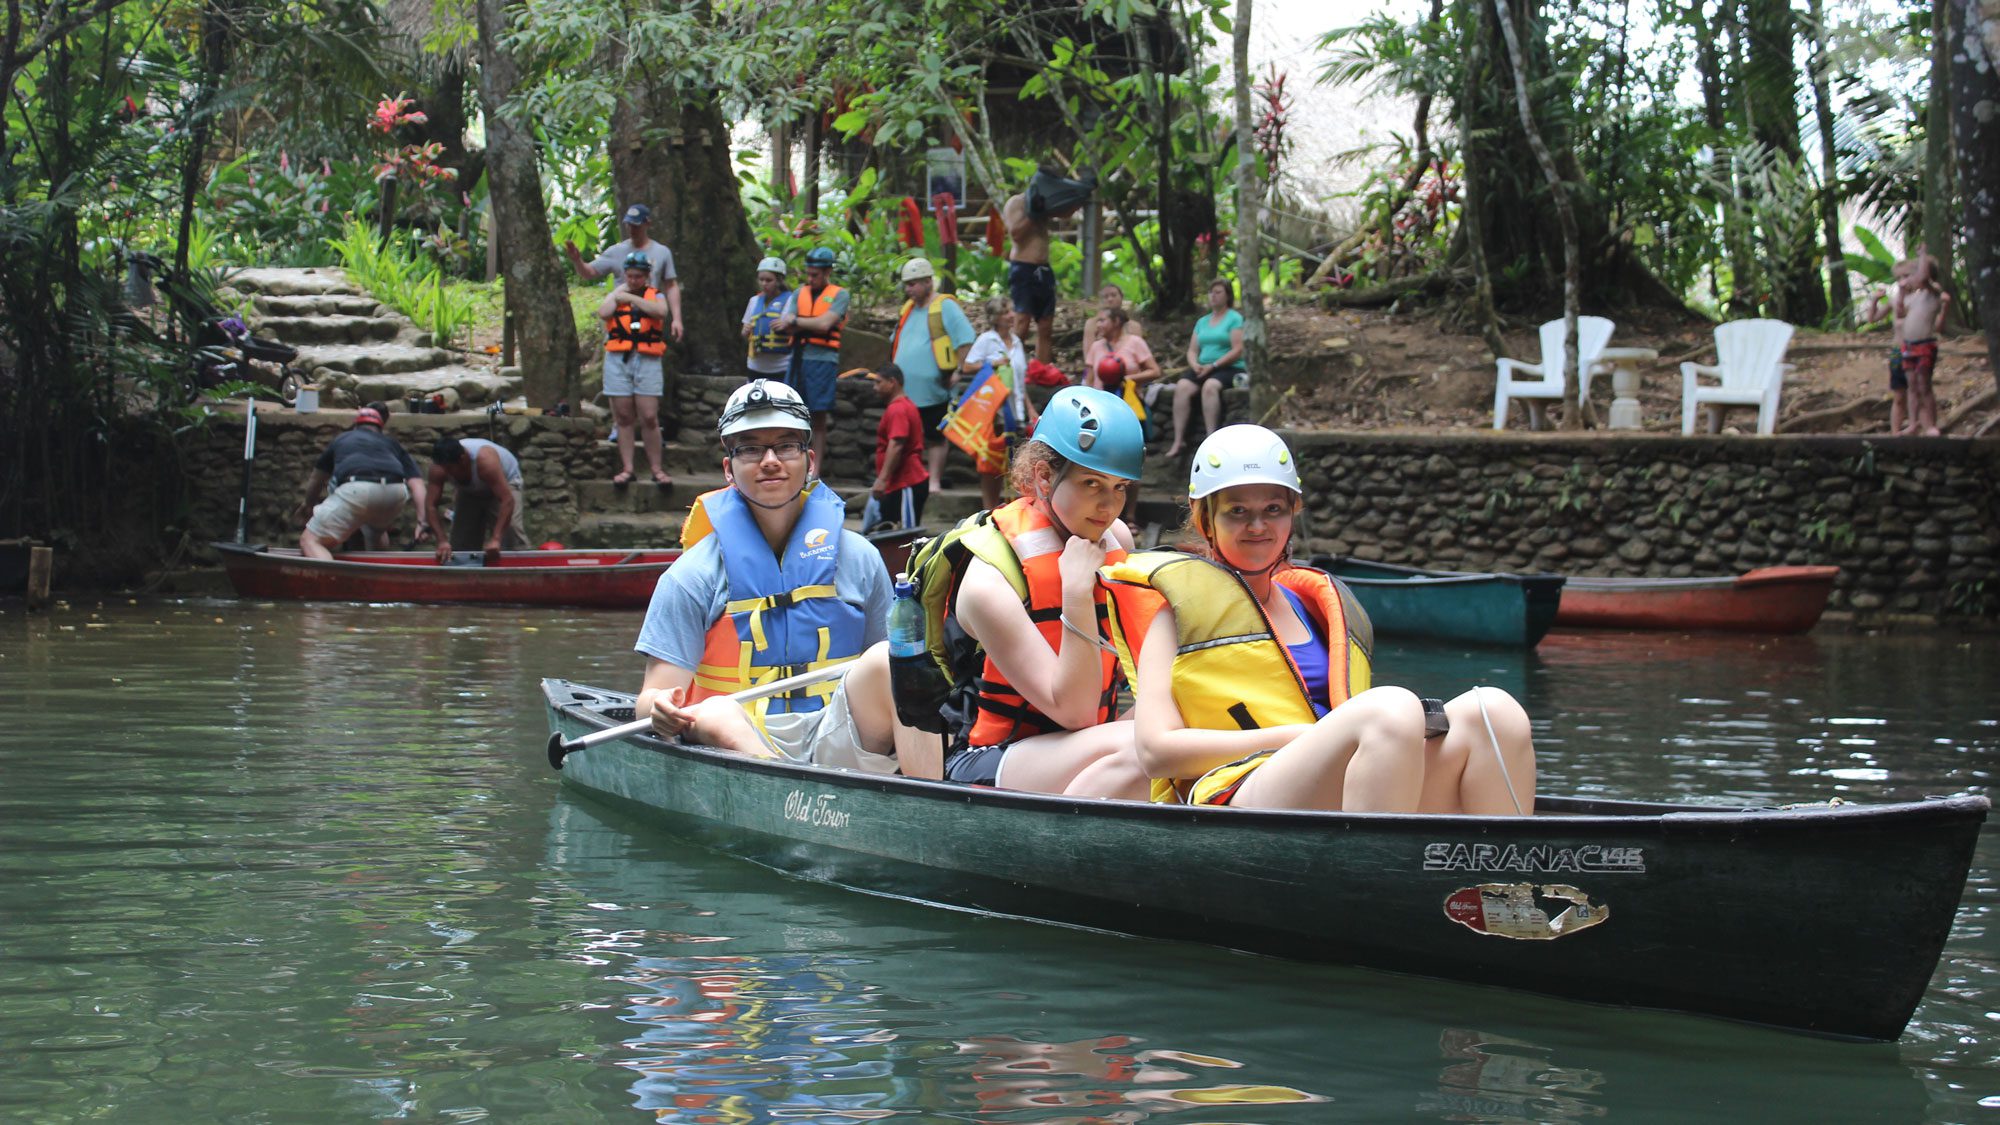 Students on a canoe